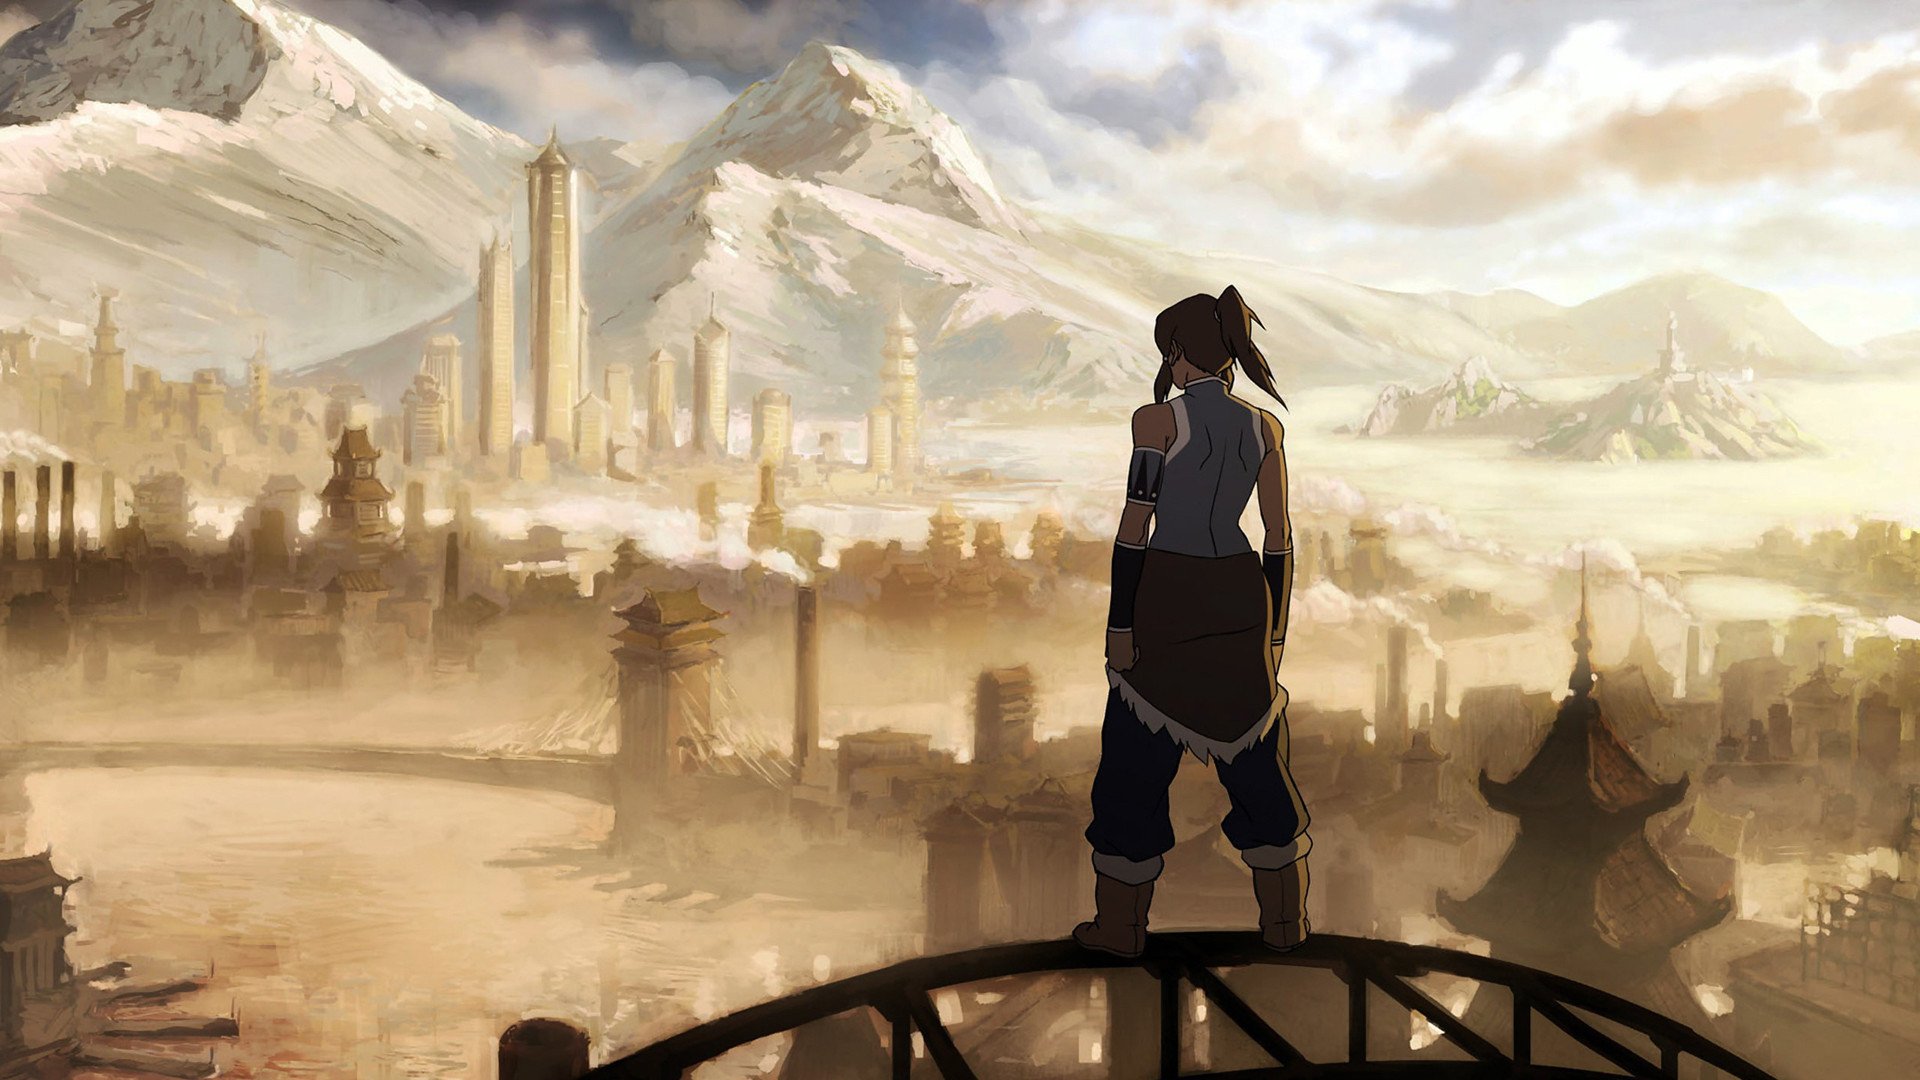 Avatar a lenda de korra dublado 1080p download